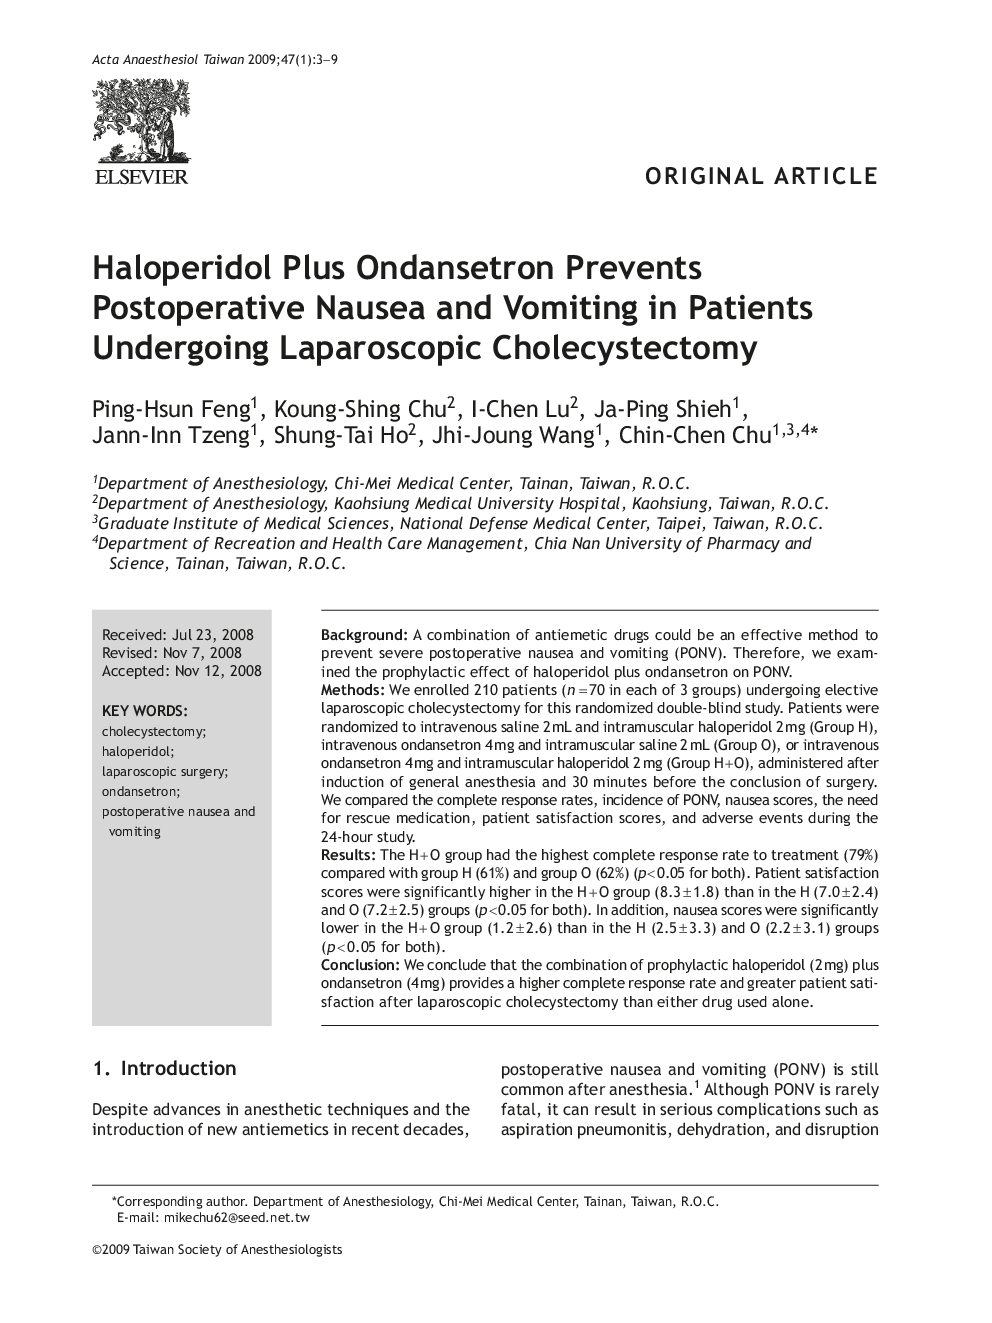 Haloperidol Plus Ondansetron Prevents Postoperative Nausea and Vomiting in Patients Undergoing Laparoscopic Cholecystectomy